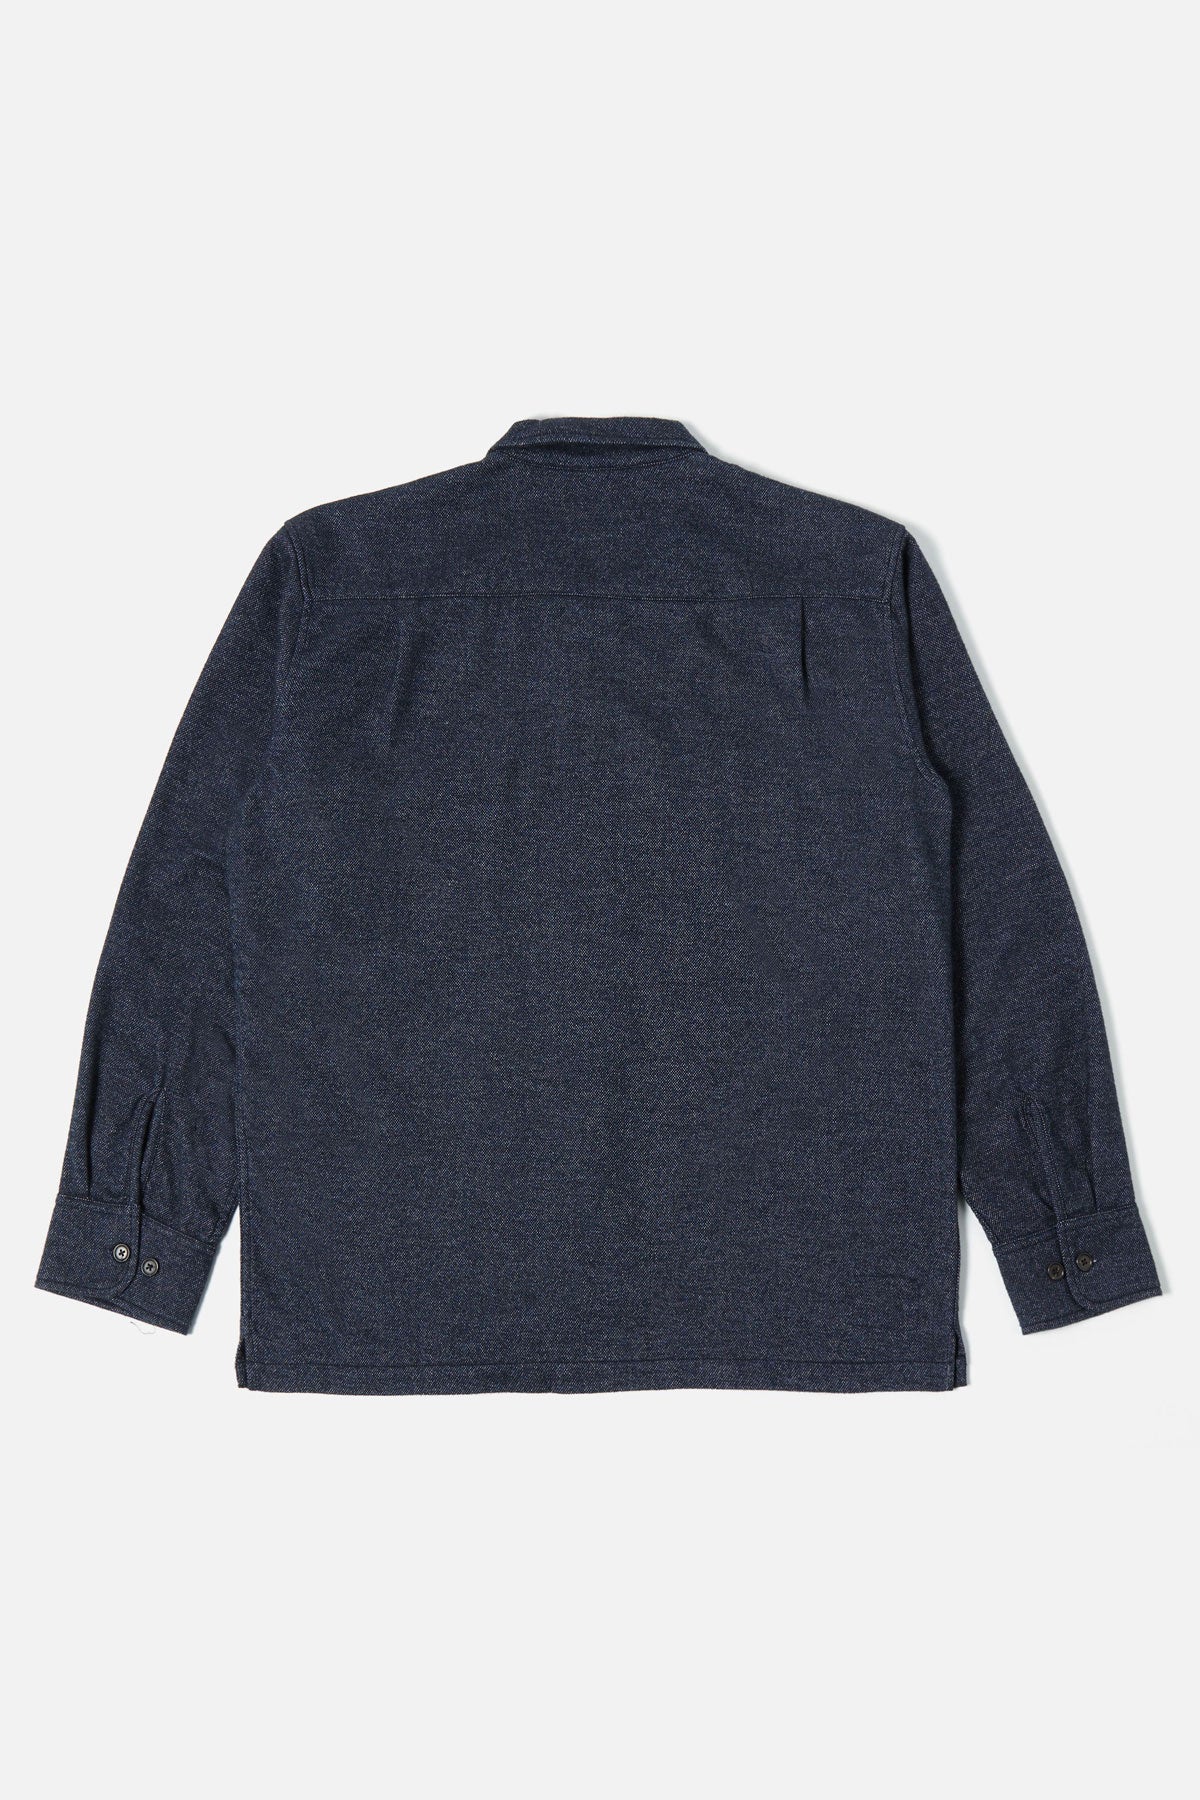 LEO BOUTIQUE Universal Works L/S Utility Flannel Shirt